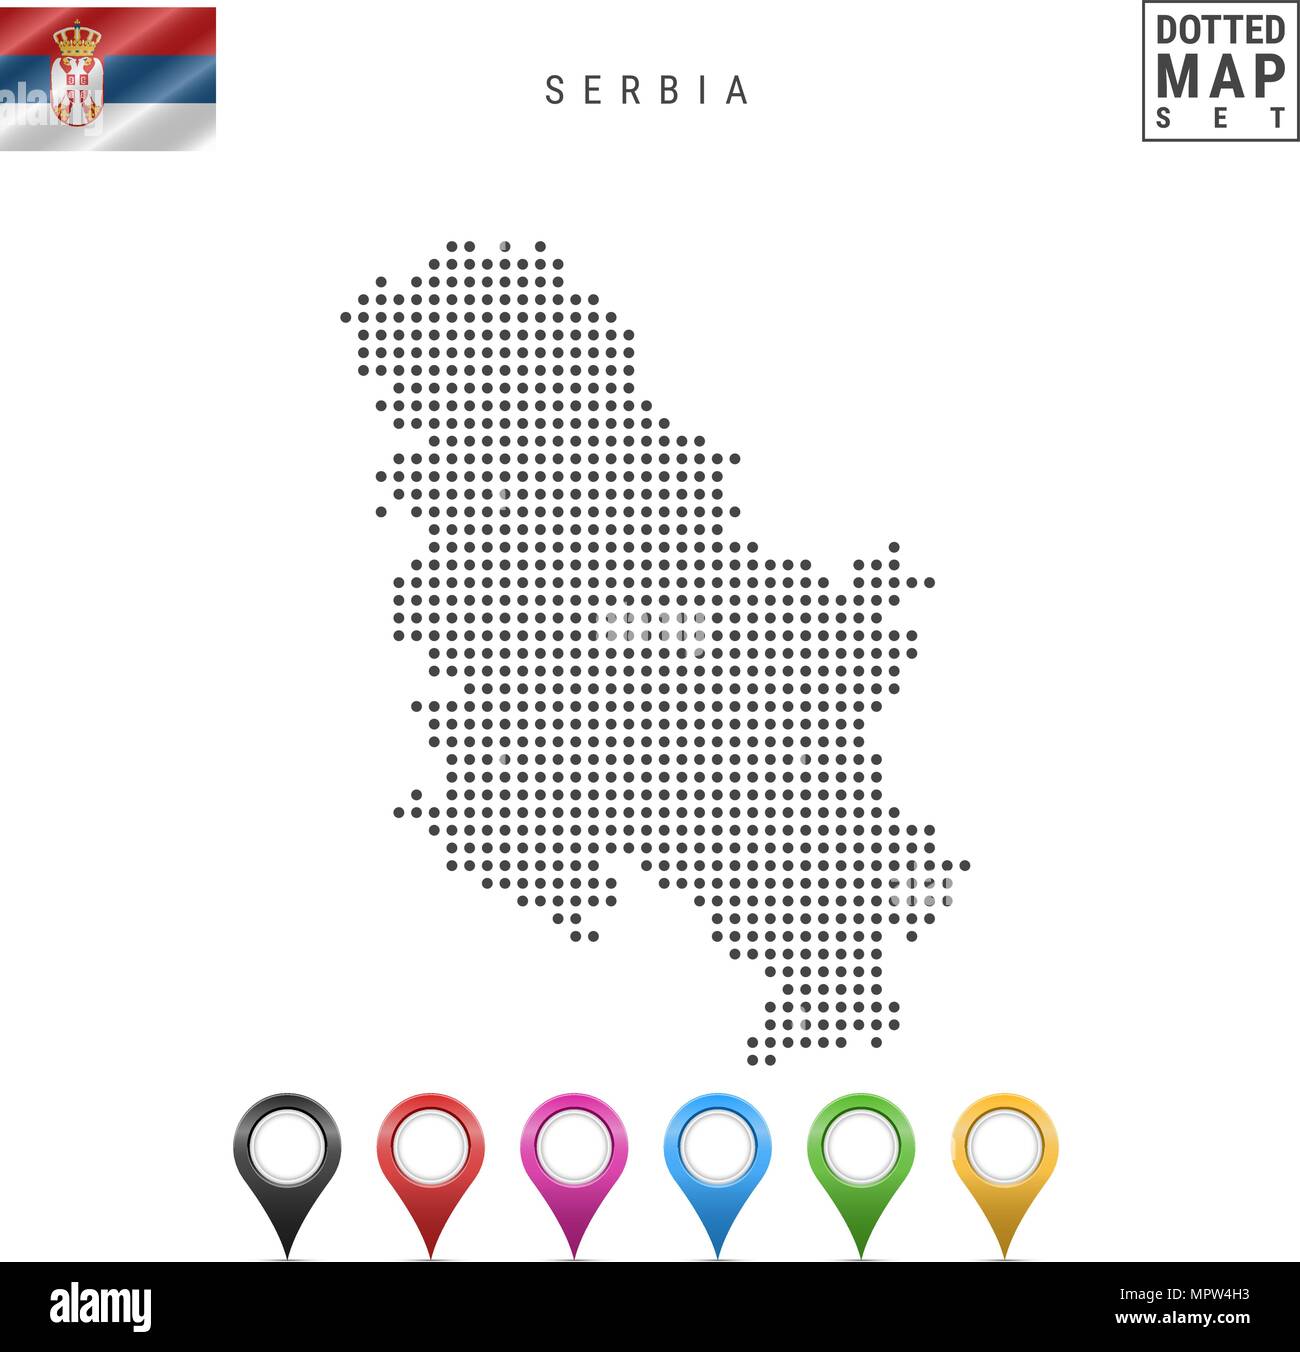 Balkan karte vektor -Fotos und -Bildmaterial in hoher Auflösung